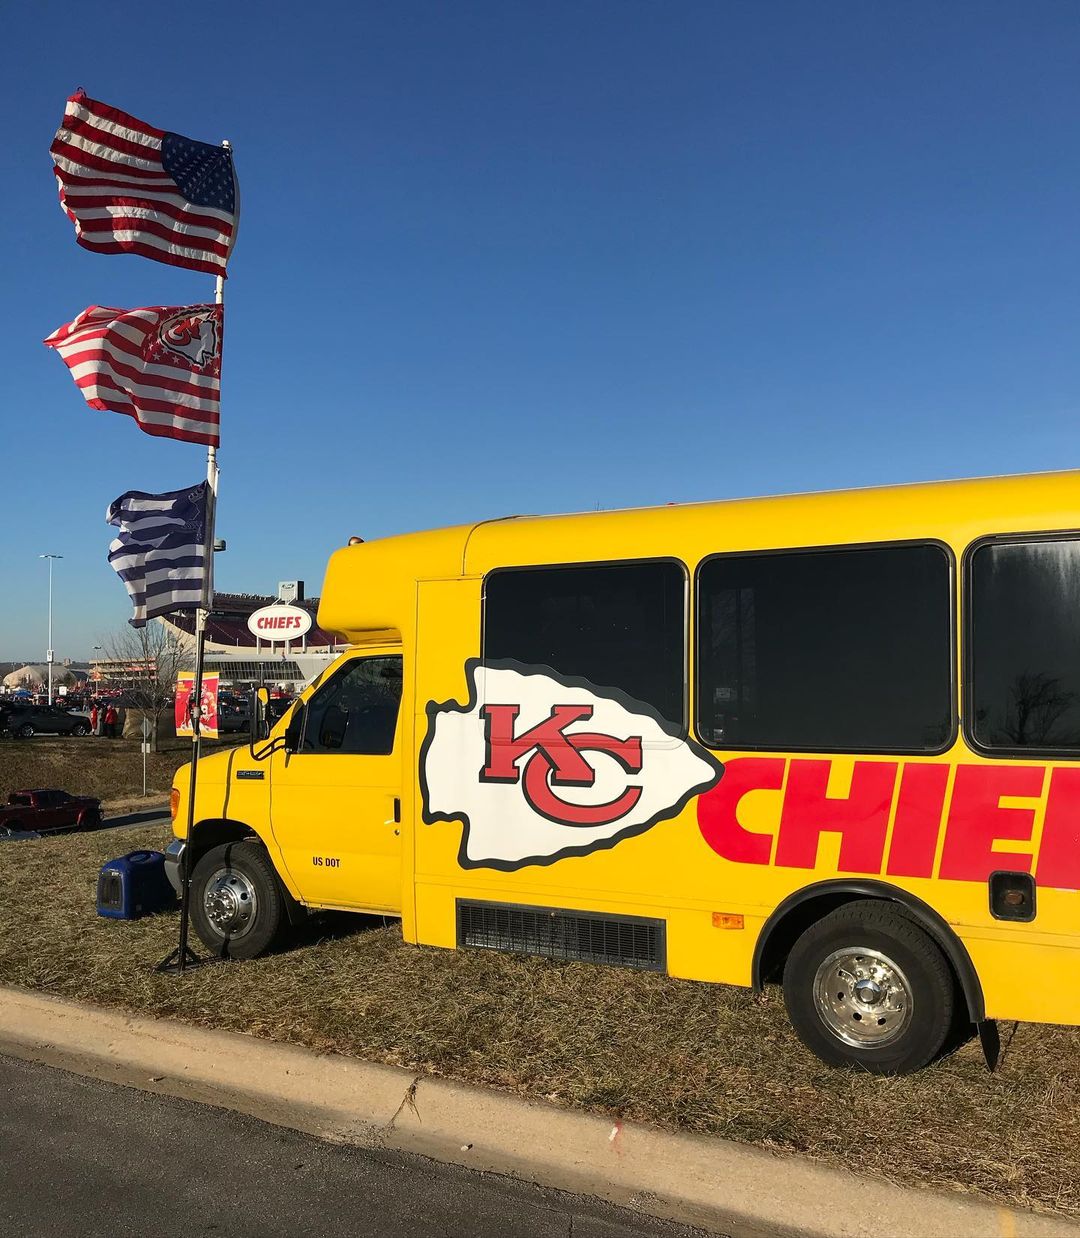 Kansas City Chiefs Fan Tailgating Bus. Photo By Instagram user @kingdomwagon